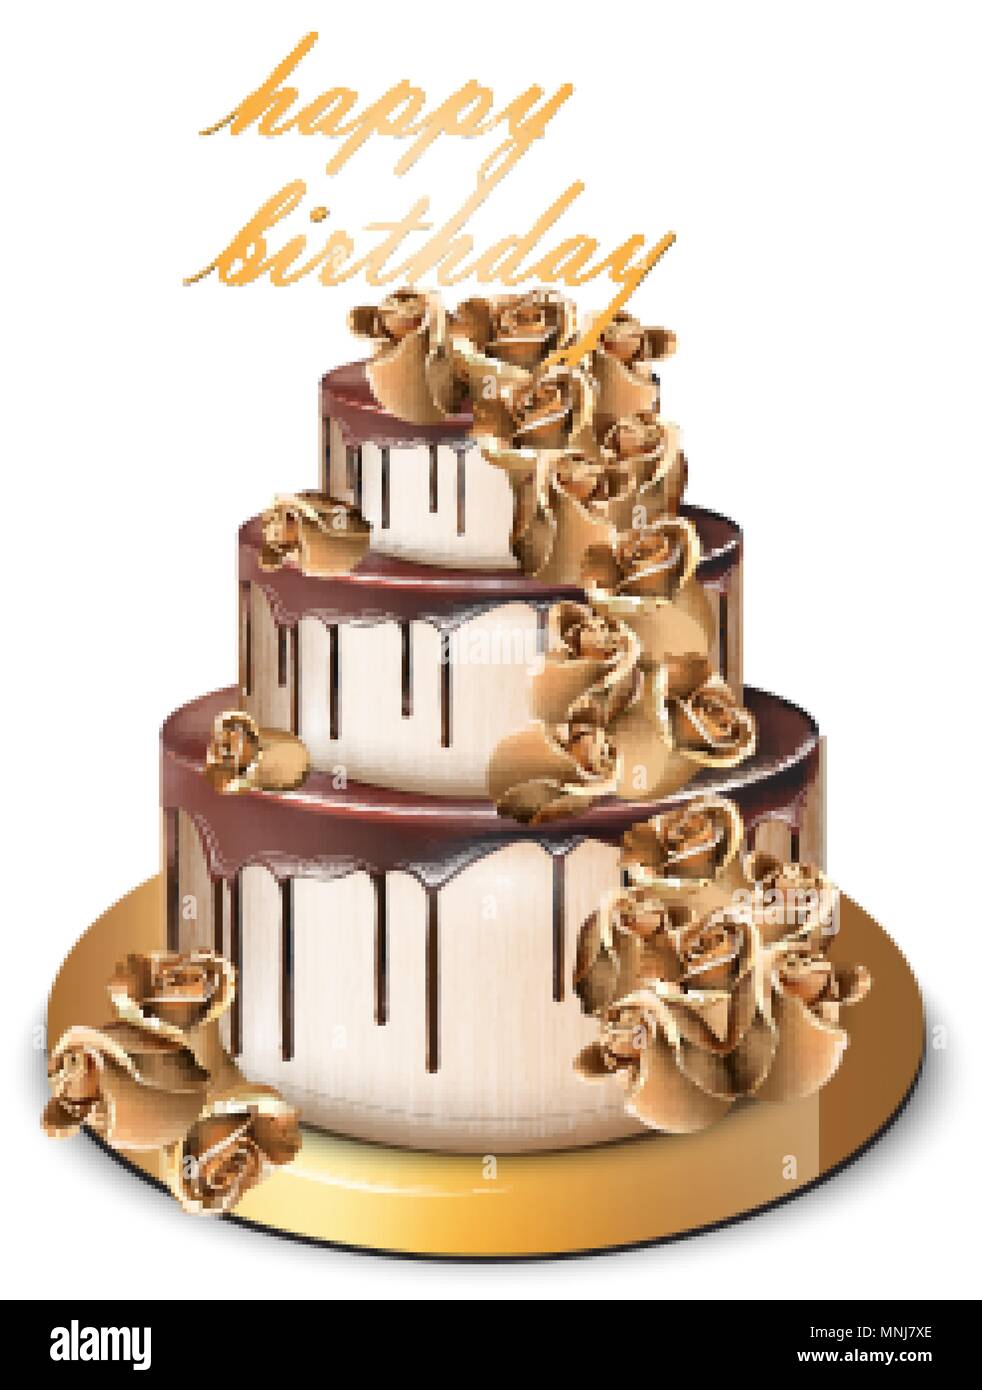 https://c8.alamy.com/comp/MNJ7XE/happy-birthday-golden-cake-vector-delicious-dessert-with-gold-roses-flowers-sweet-design-MNJ7XE.jpg